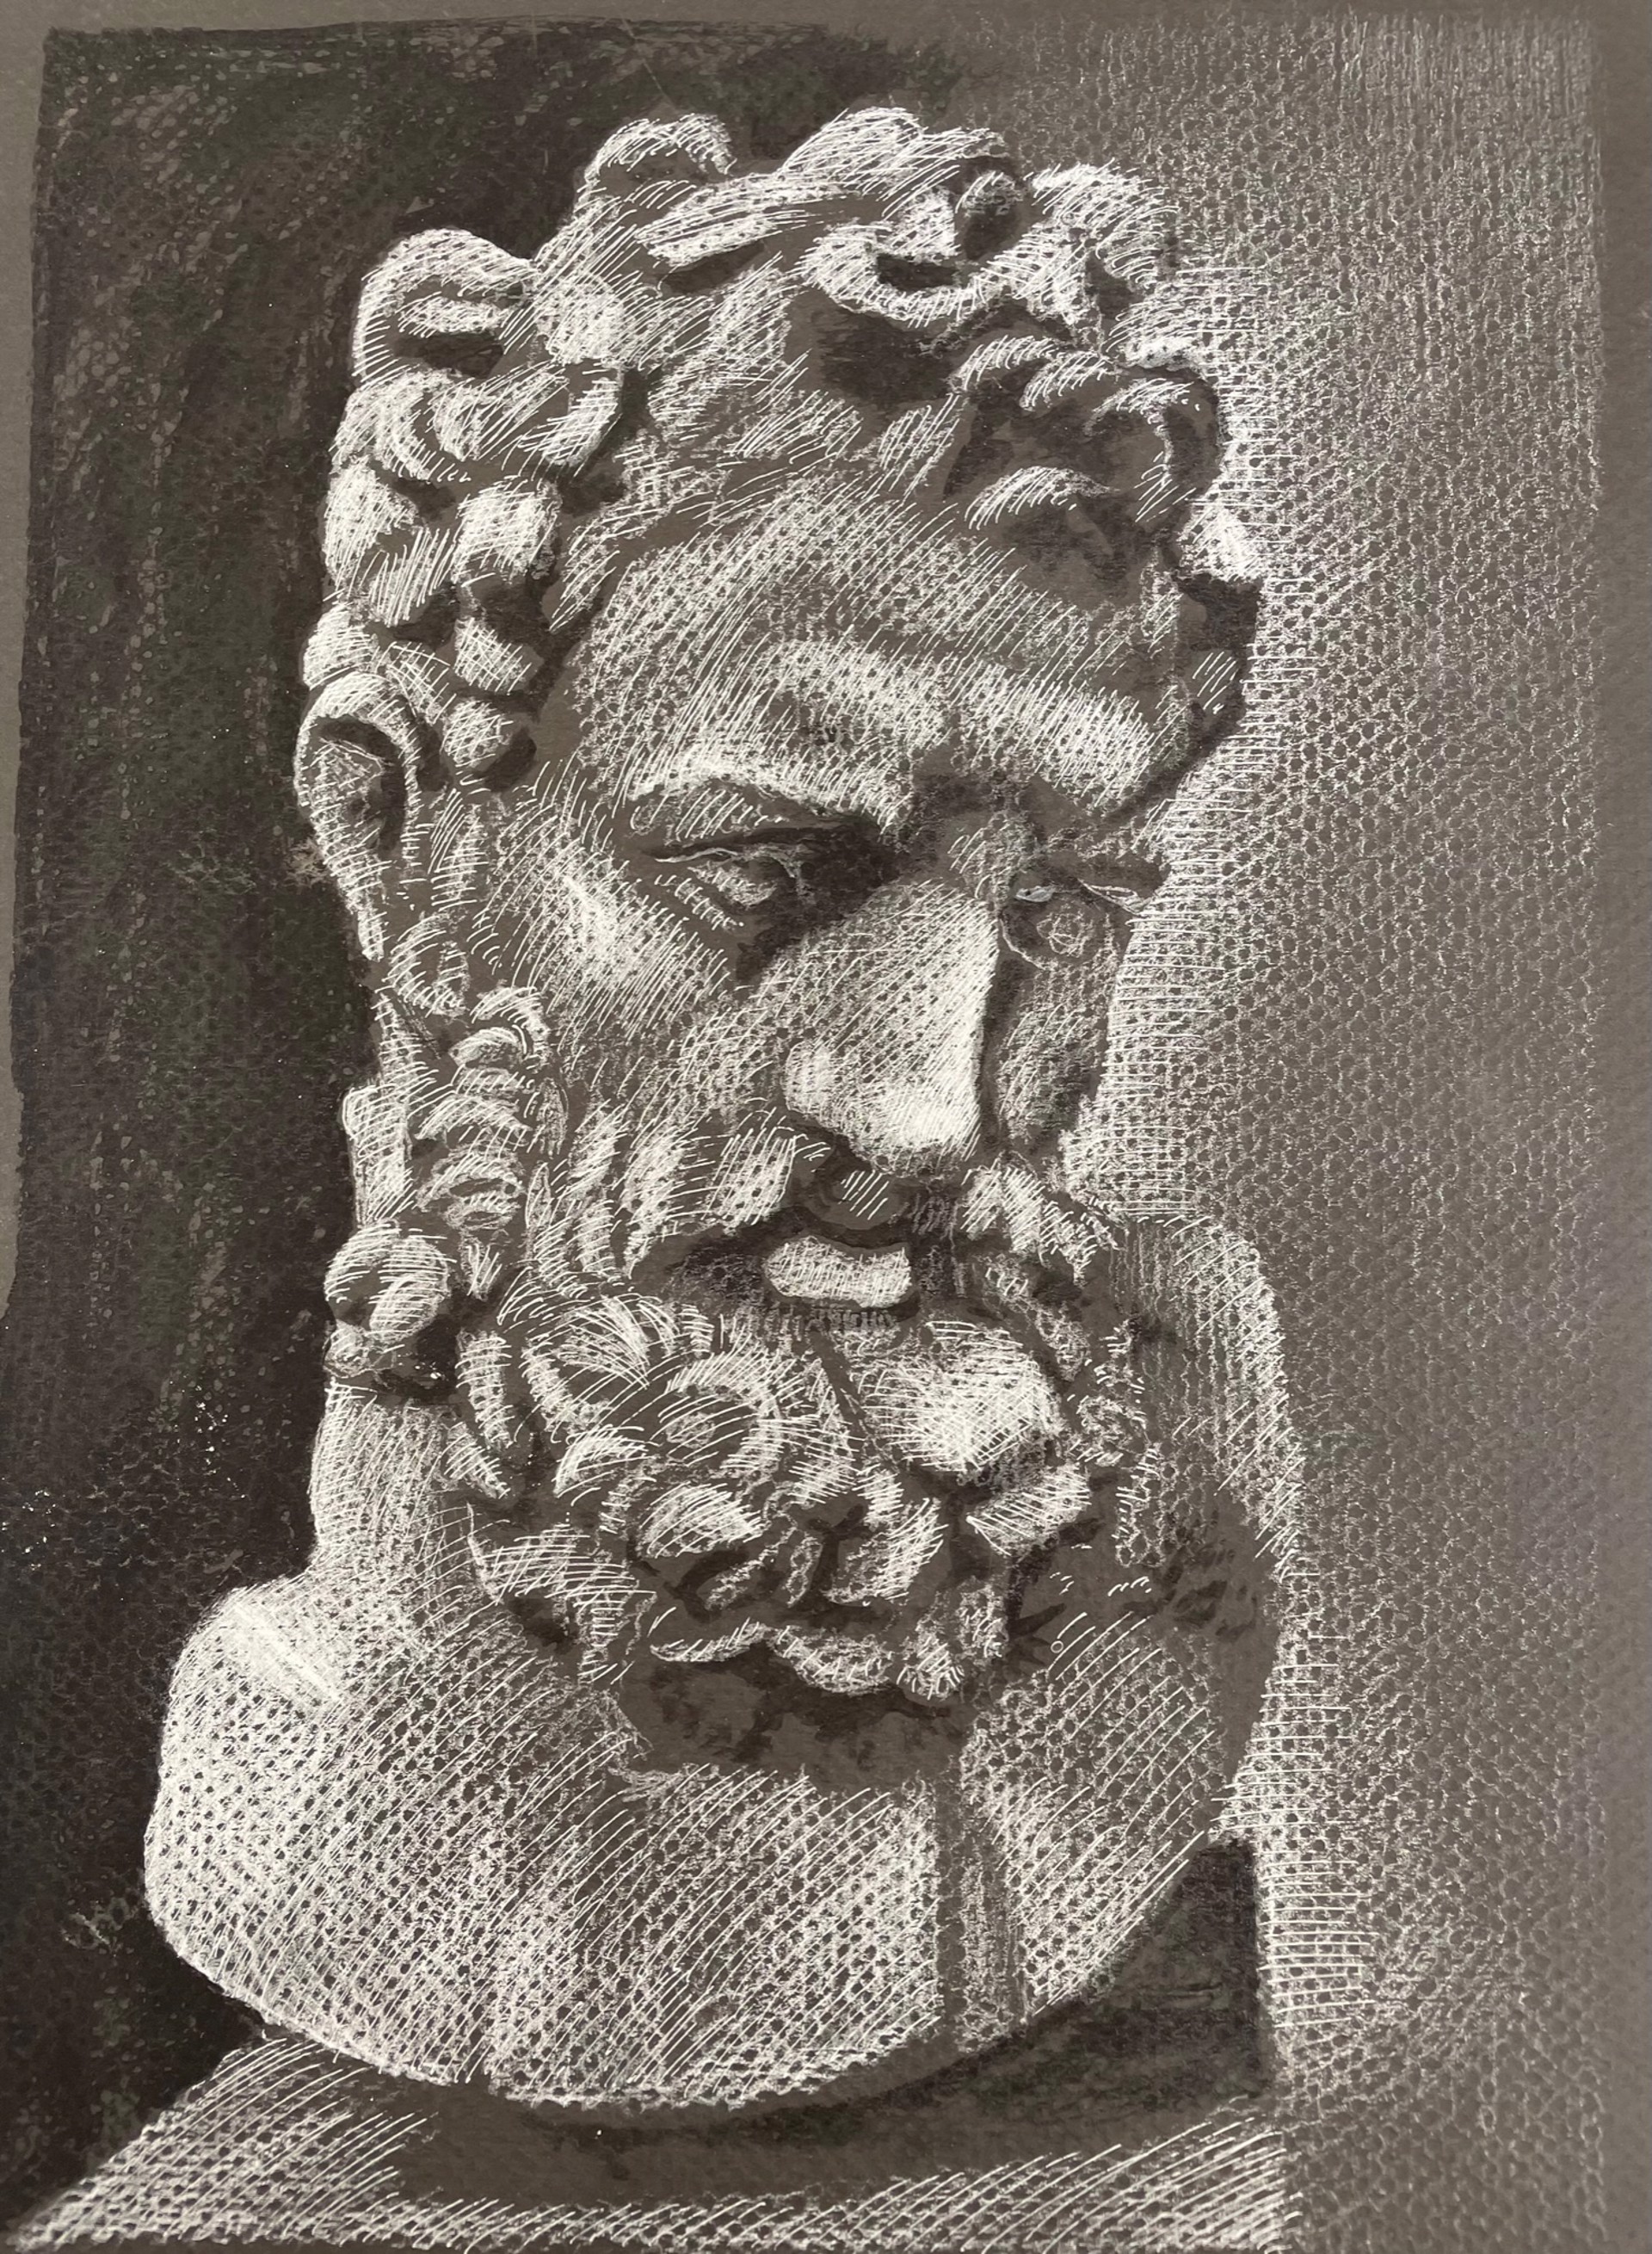 Odysseus by Ed Ford